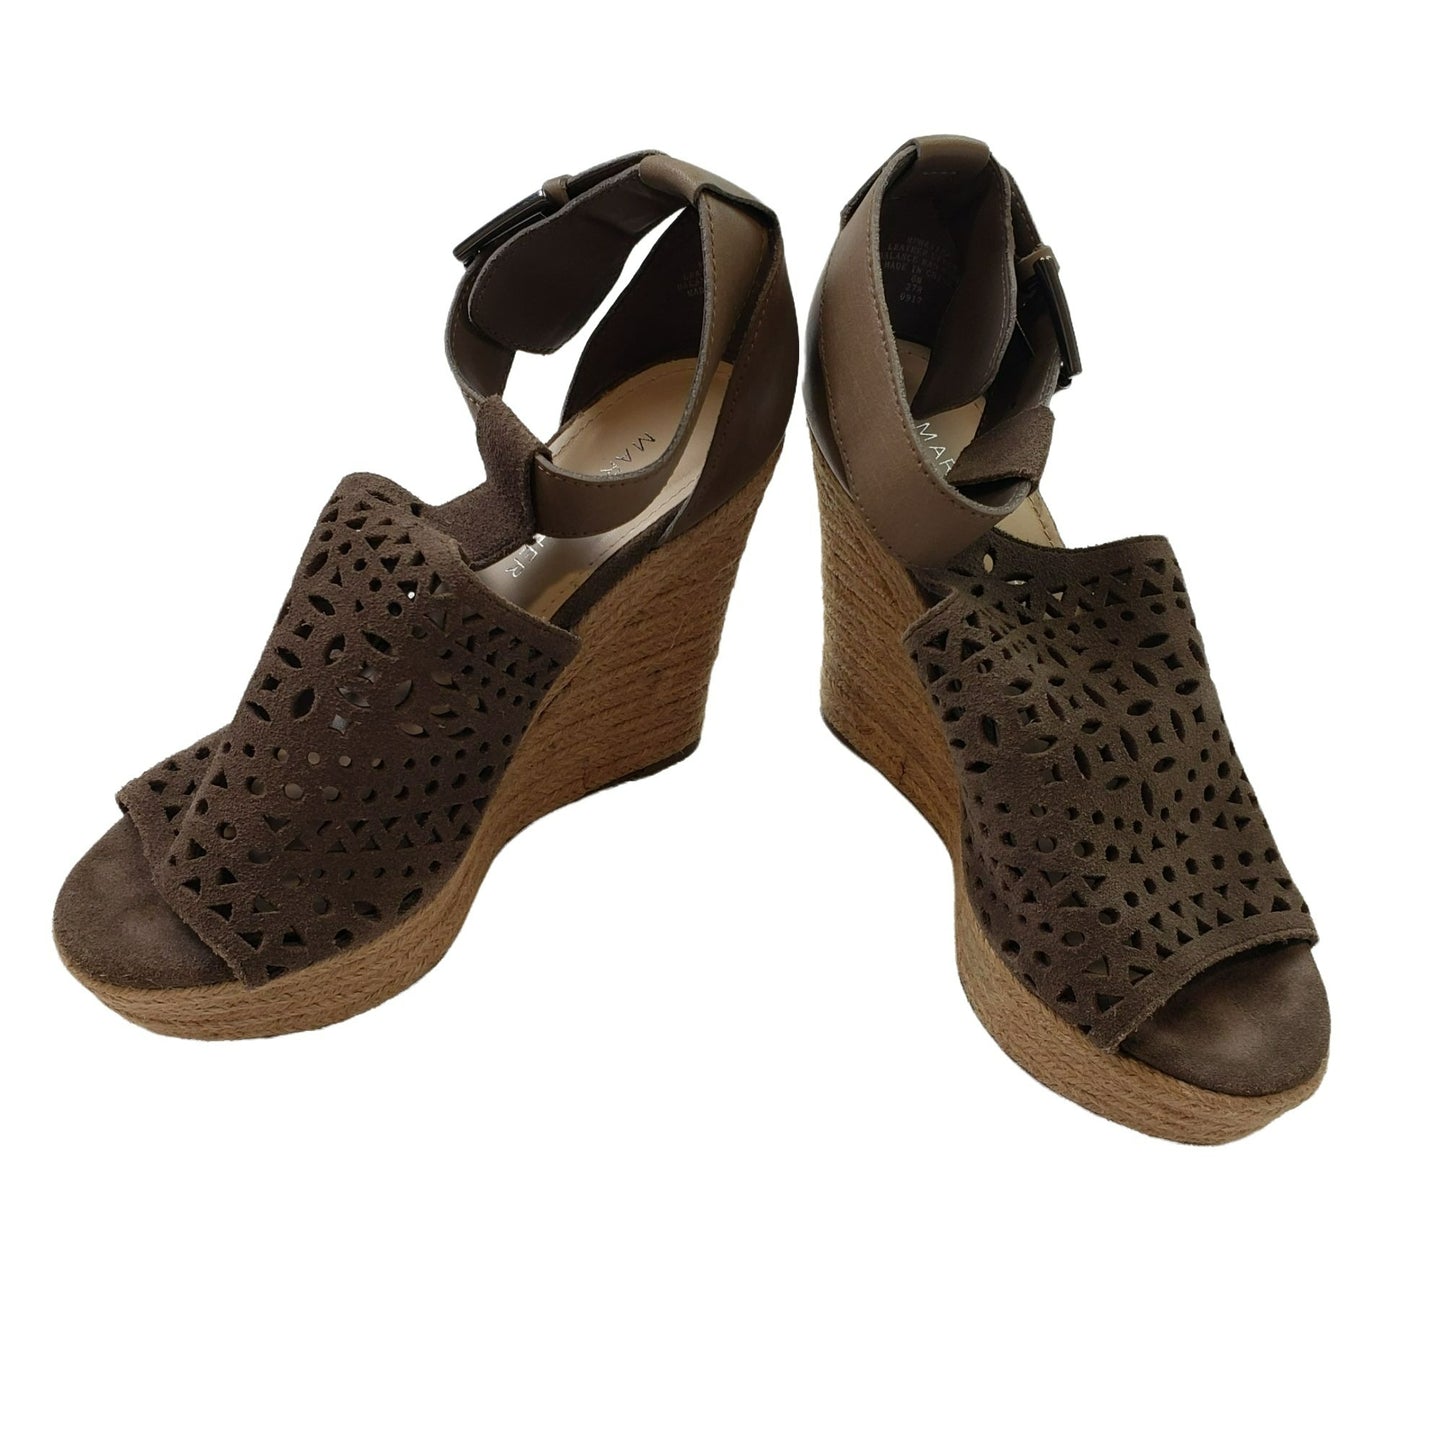 Marc Fisher Hasina Leather Suede Platform Espadrille Sandals